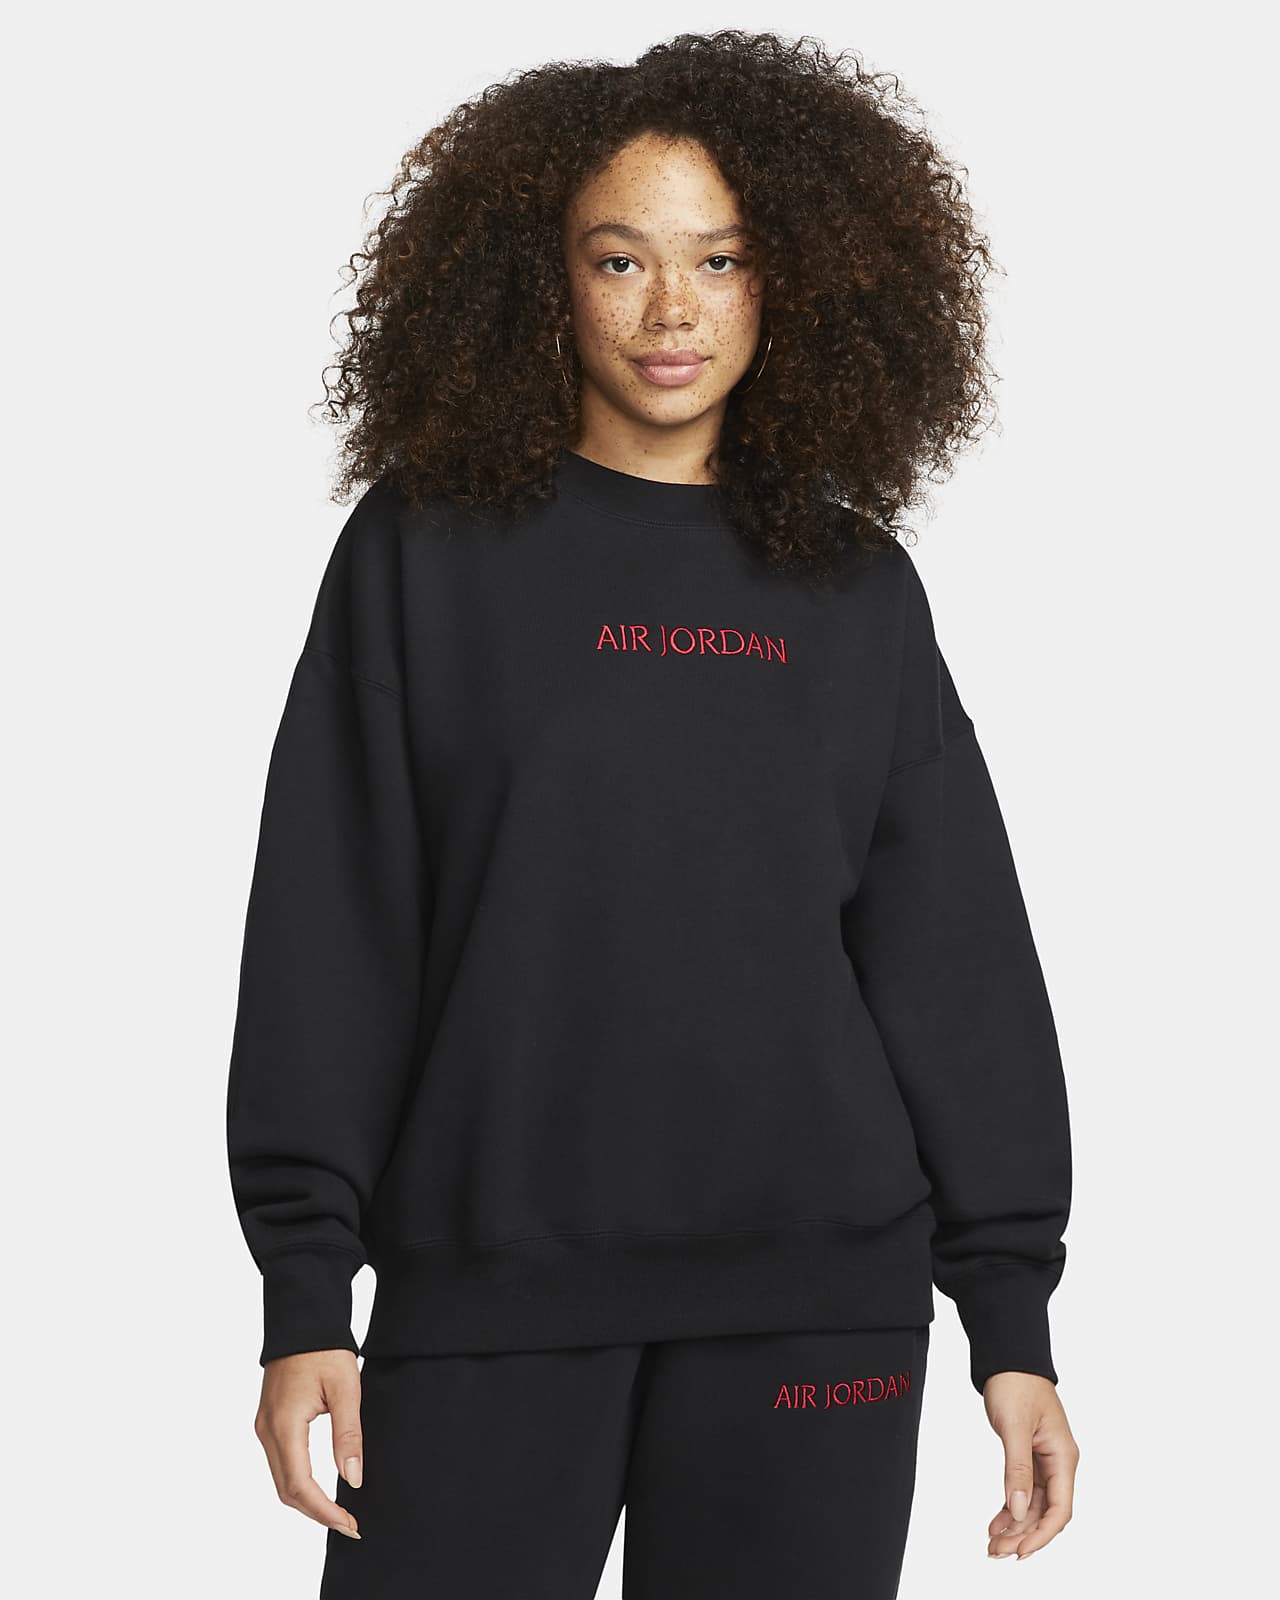 Air Jordan Women's Crew Sweatshirt